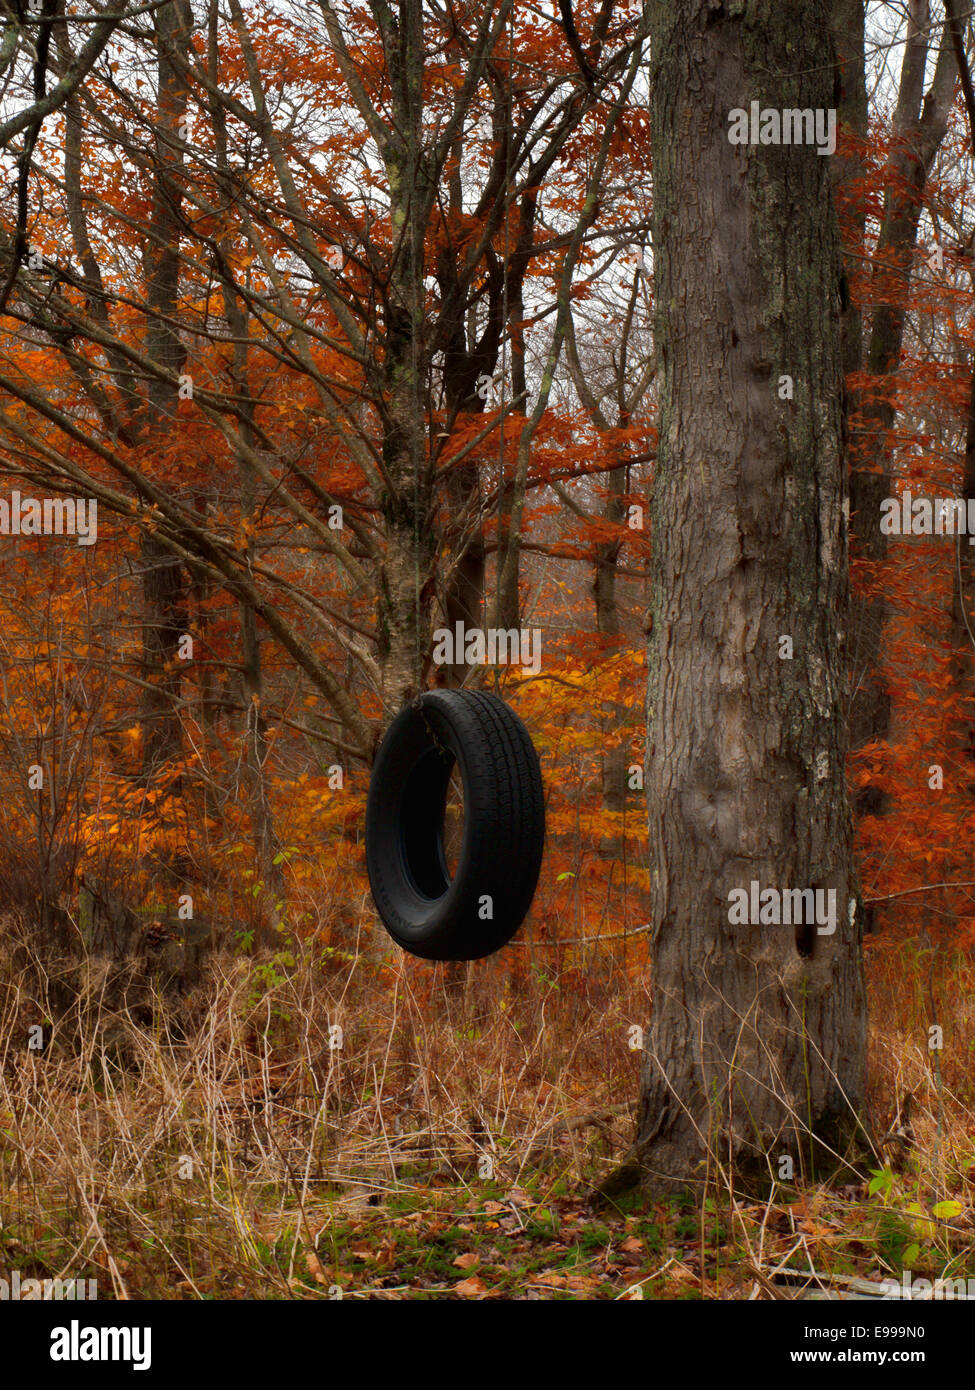 tire swing amid autumn foliage Stock Photo